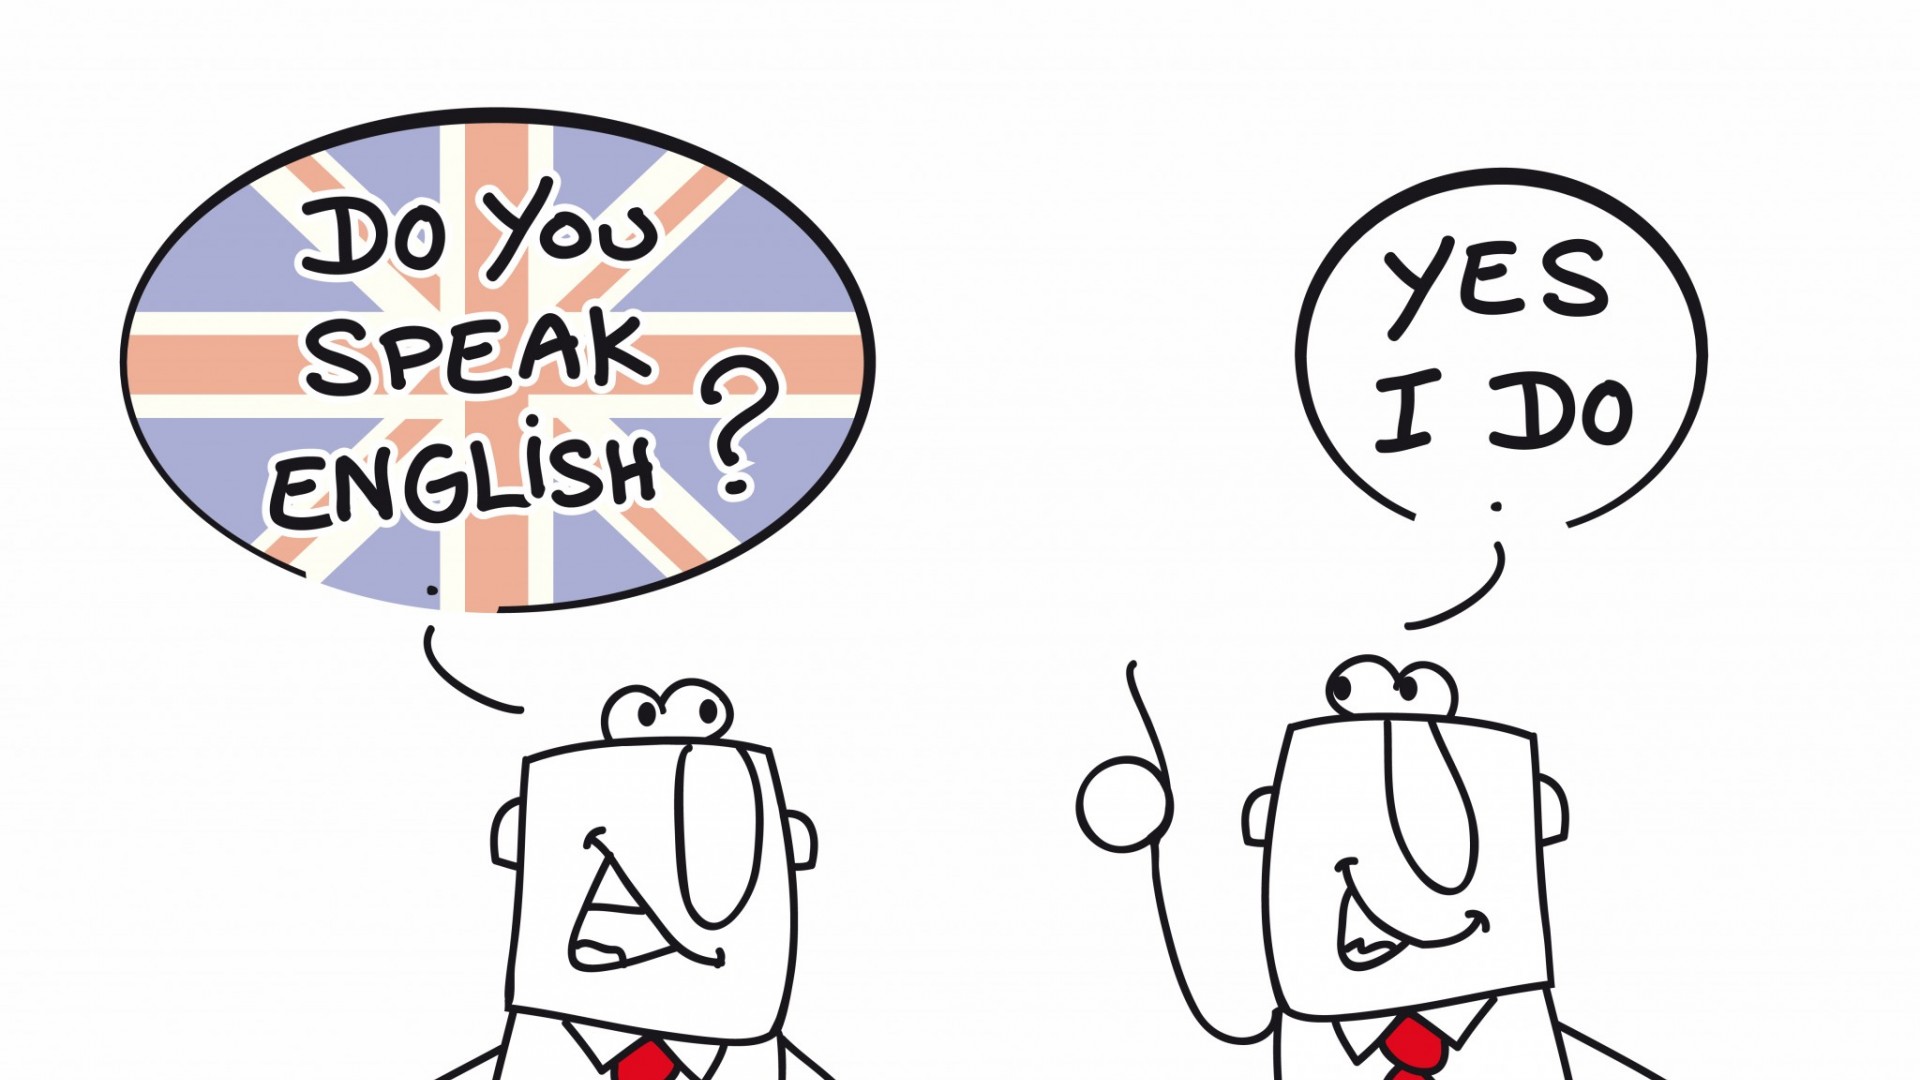 Yes can you speak english. Speak English. Разговор на английском. Говорим по-английски. Разговаривать на английском.